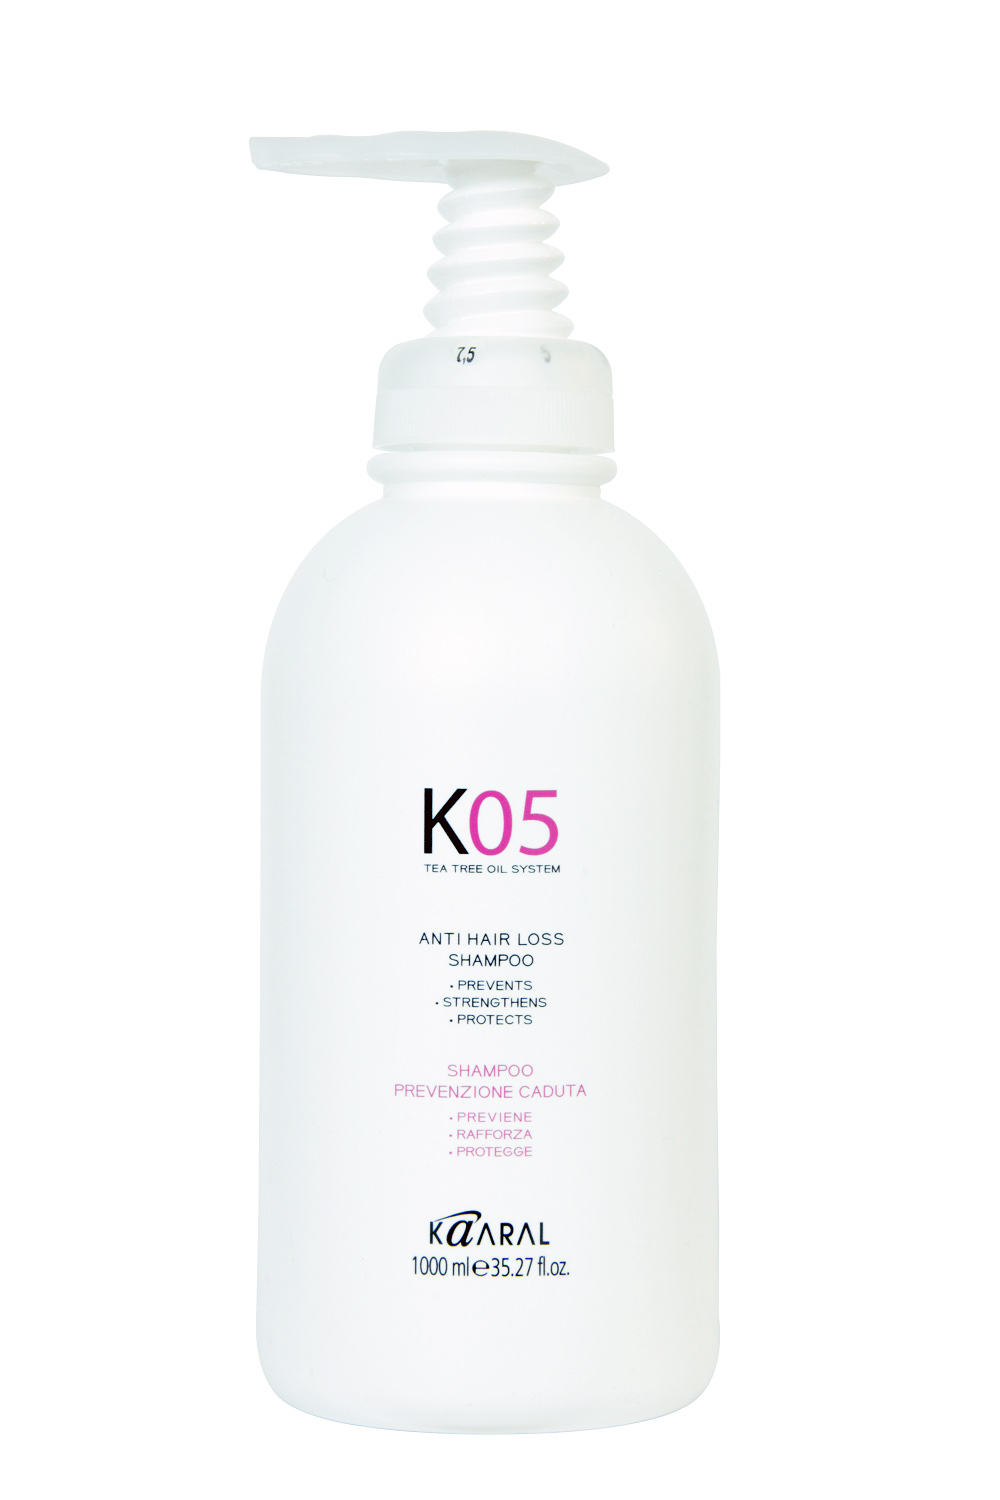 Kaaral Шампунь для профилактики выпадения волос Anti Hair Loss Shampoo, 1000 мл (Kaaral, K05)